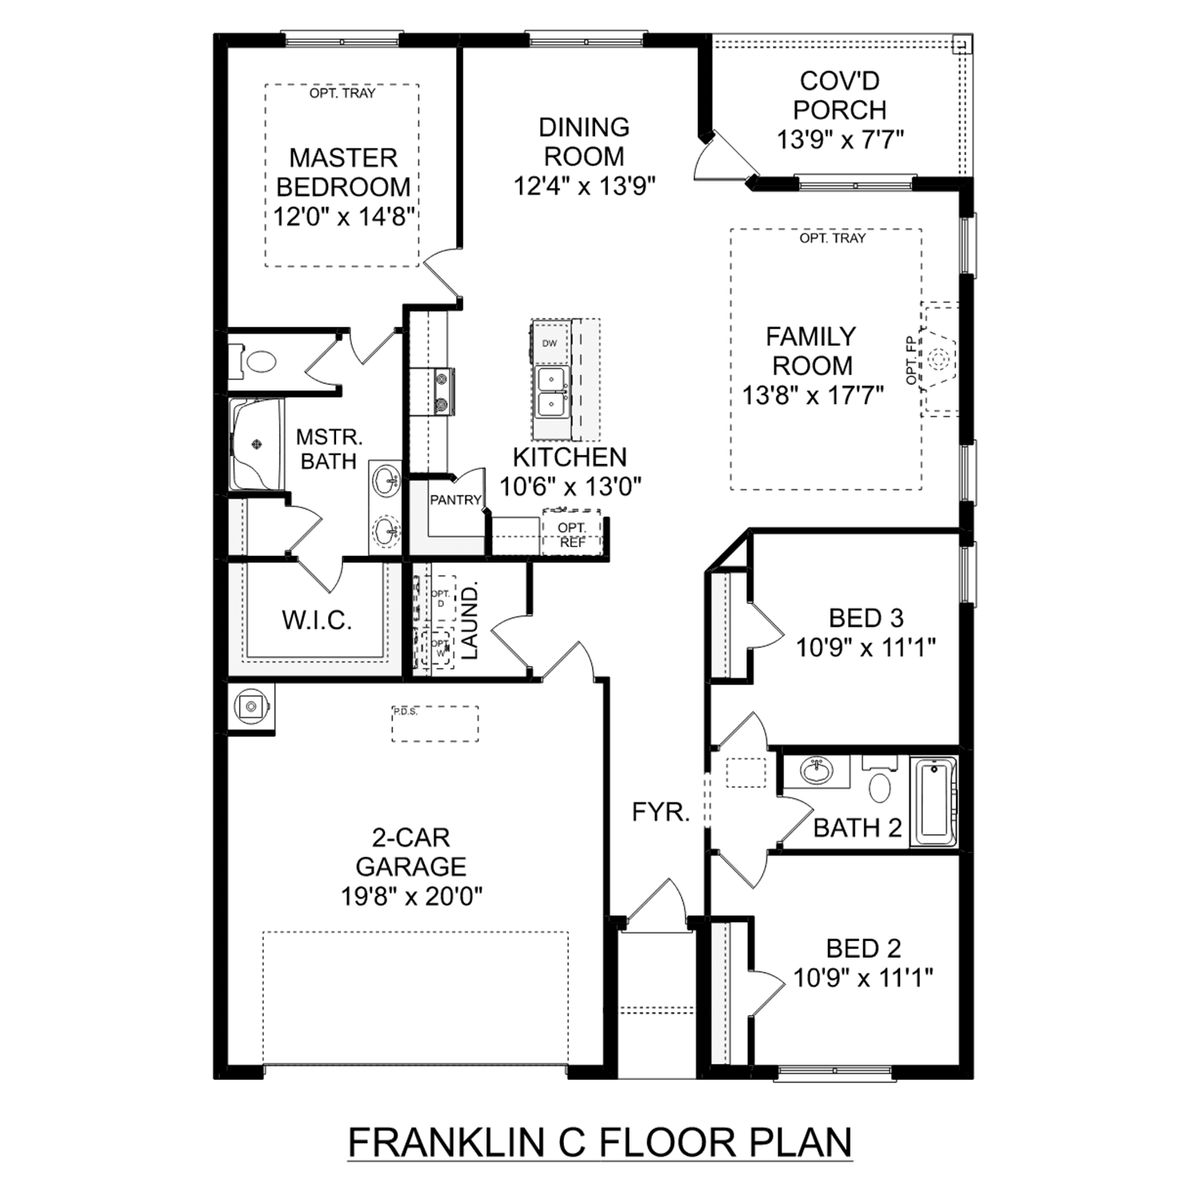 1 - The Franklin C floor plan layout for 118 Burdine Street in Davidson Homes' Creek Grove community.